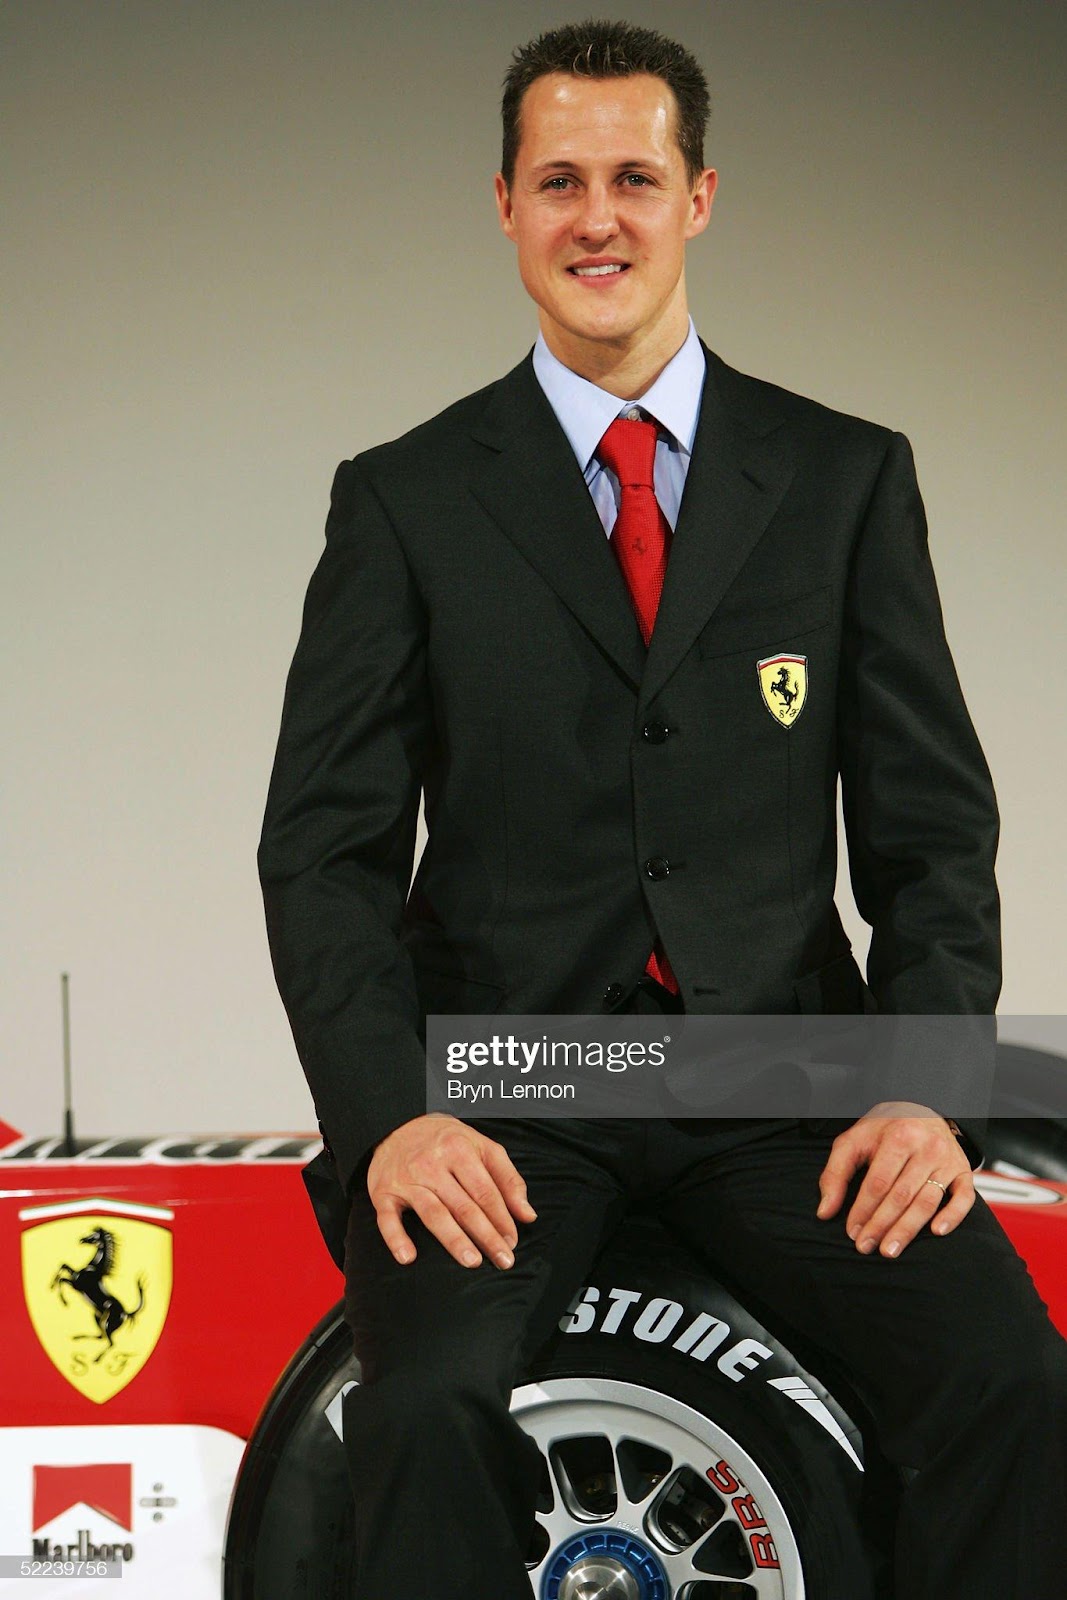 Michael Schumacher poses the new Ferrari F2005 Formula One car at the Ferrari factory on February 25, 2005 in Maranello, Italy.